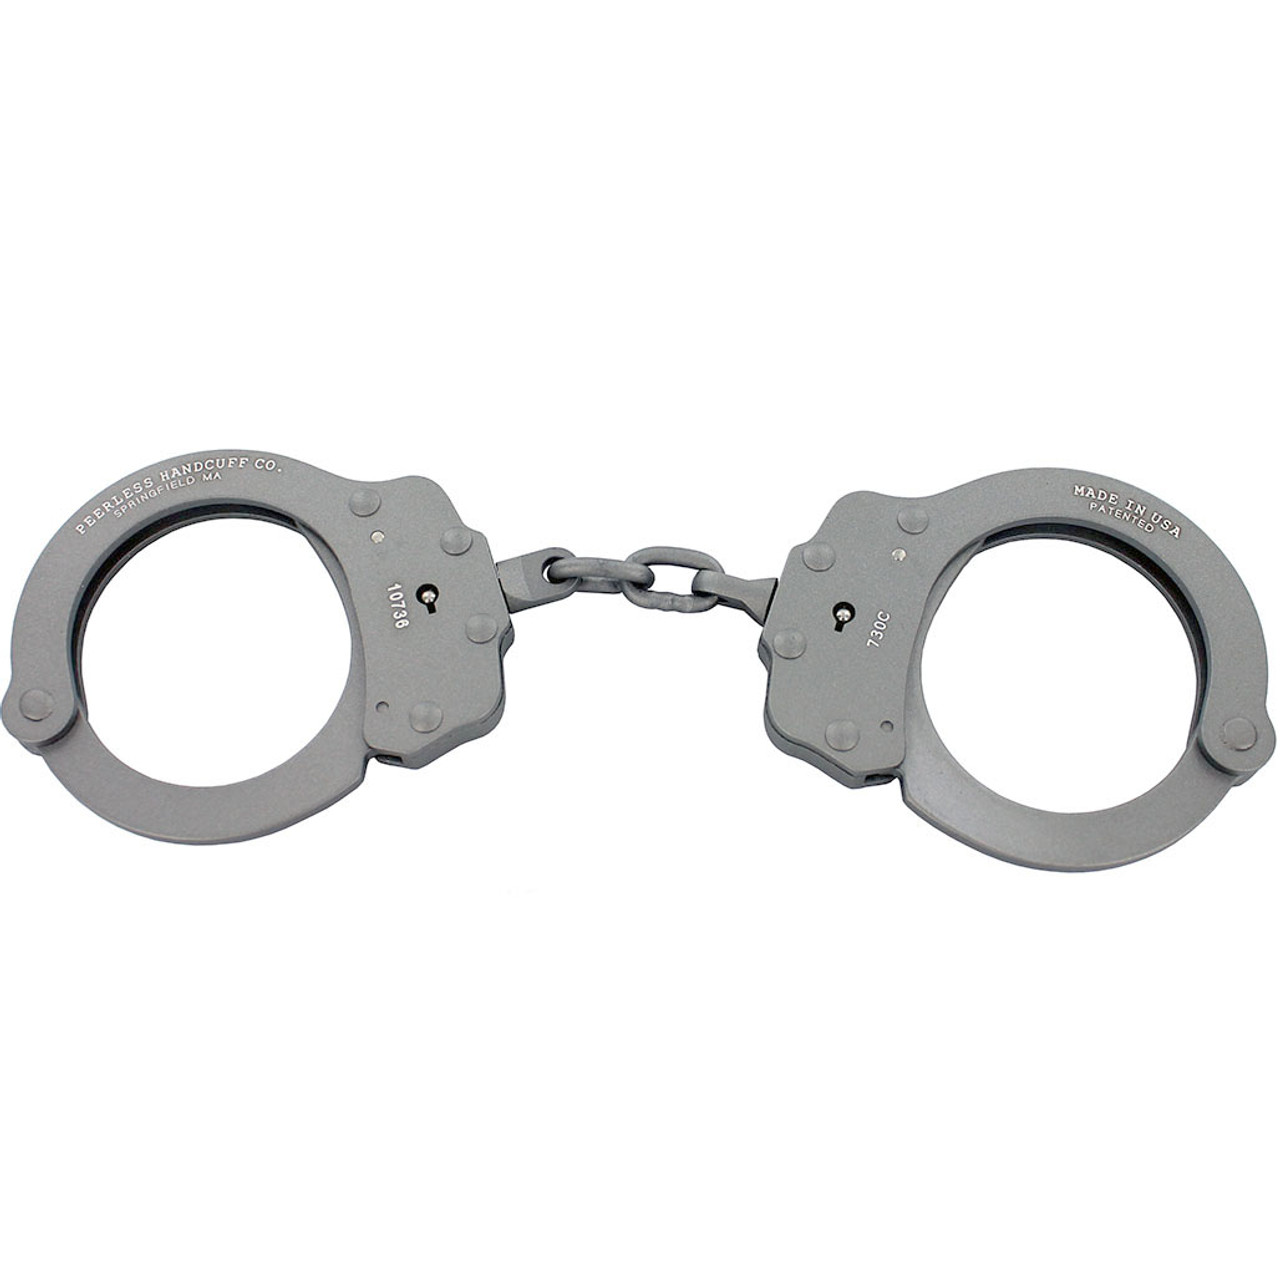 Peerless PR-4100 Handcuff Key, Silver, Standard Size, 1 Each